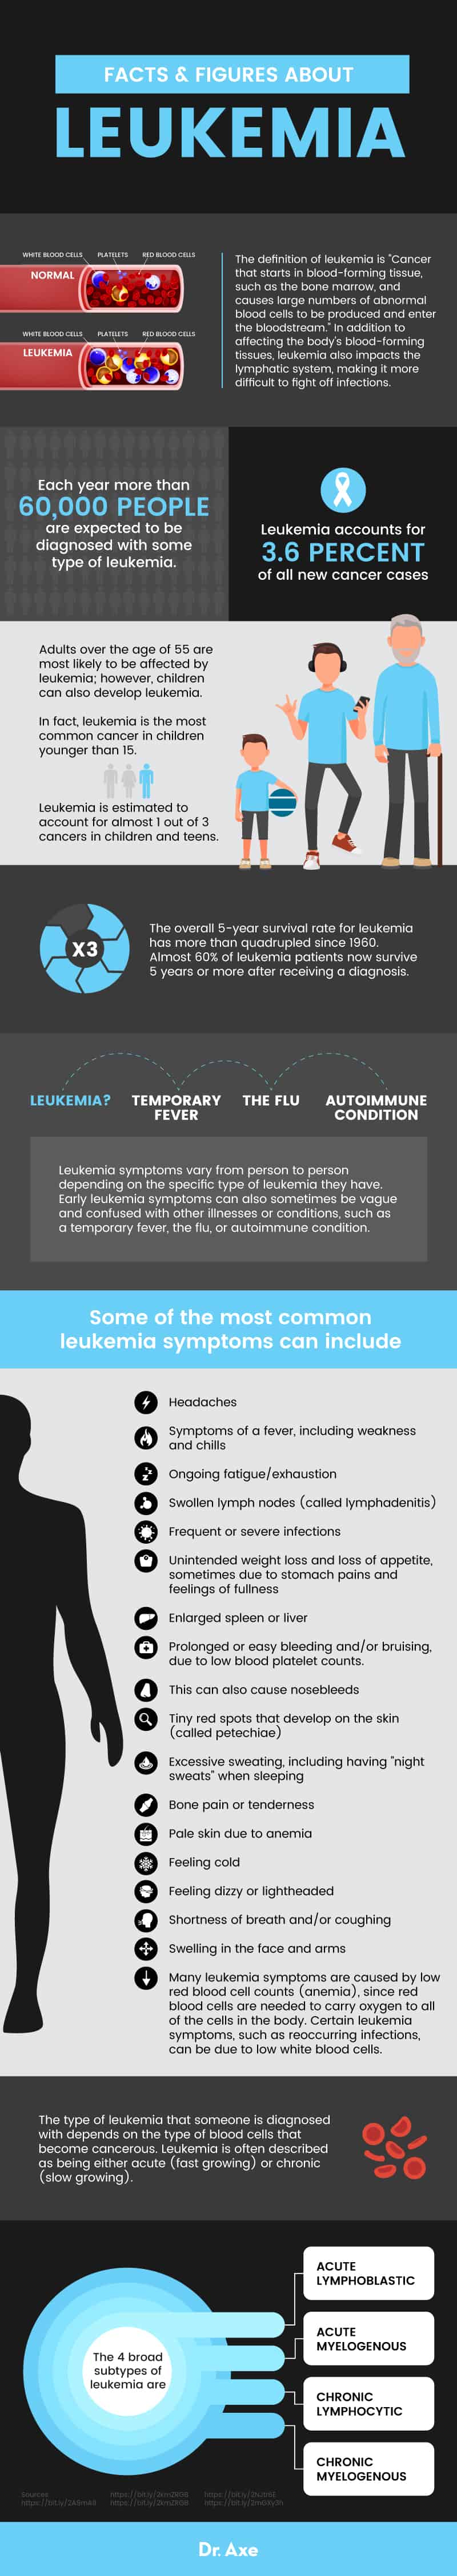 Leukemia Symptoms Facts & Figures - Dr. Axe